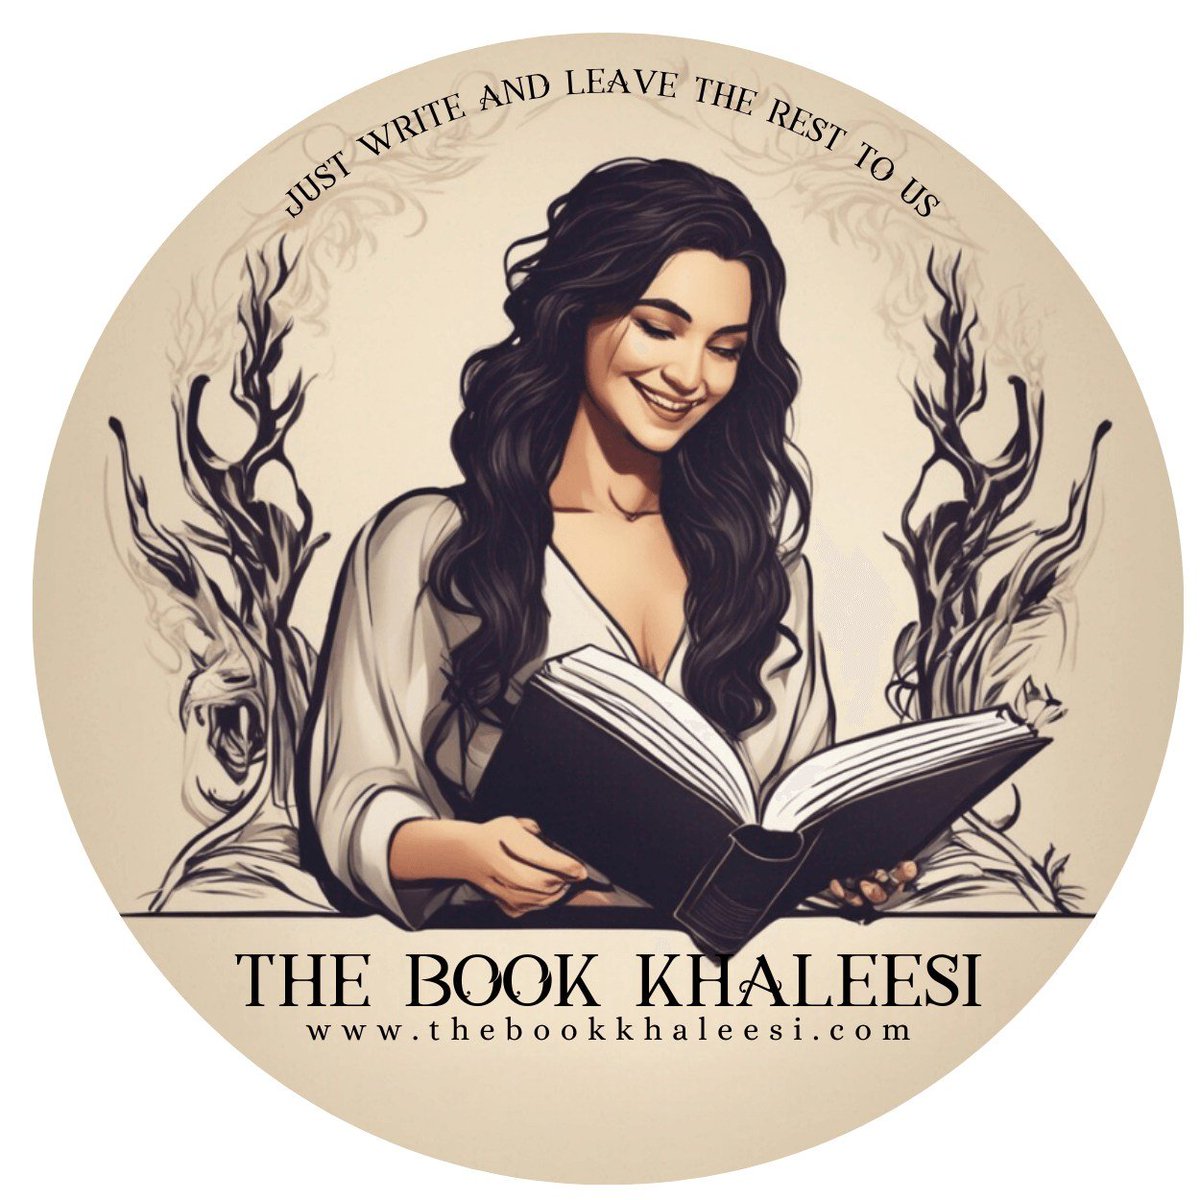 An author's best friend. THE BOOK K ALEESI thebookkhaleesi.com